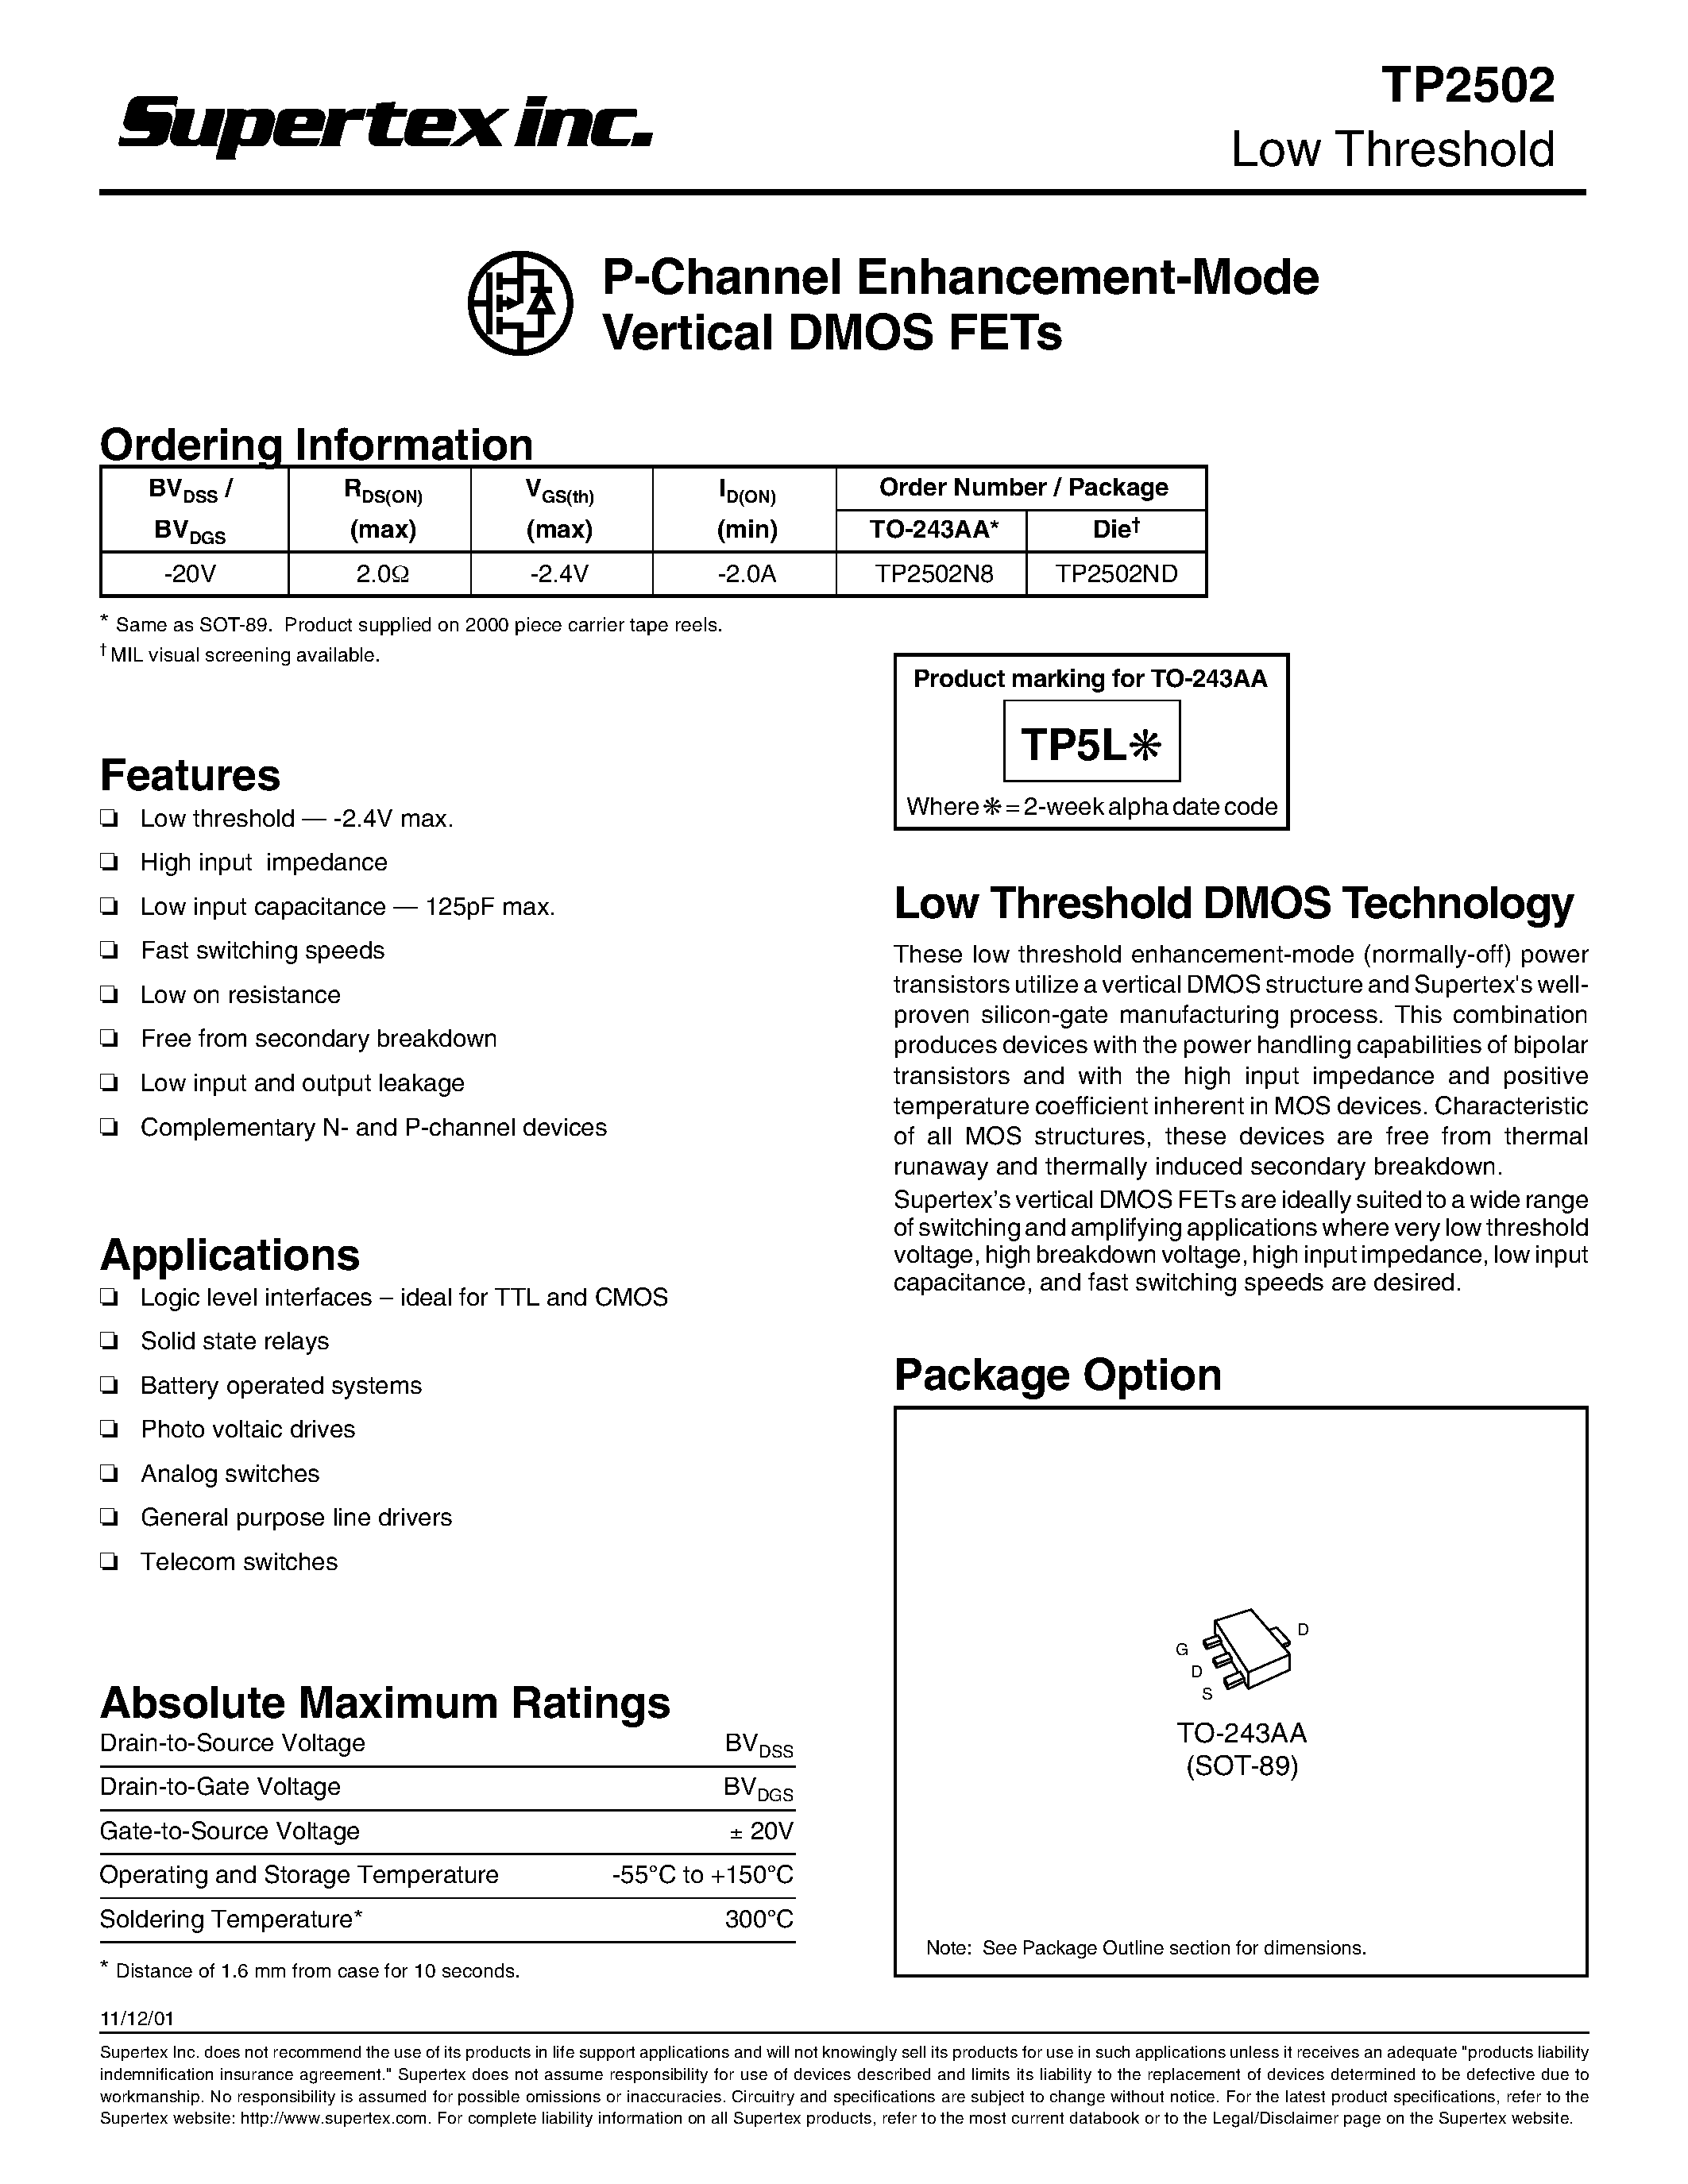 Datasheet TP2502ND - P-Channel Enhancement-Mode Vertical DMOS FETs page 1